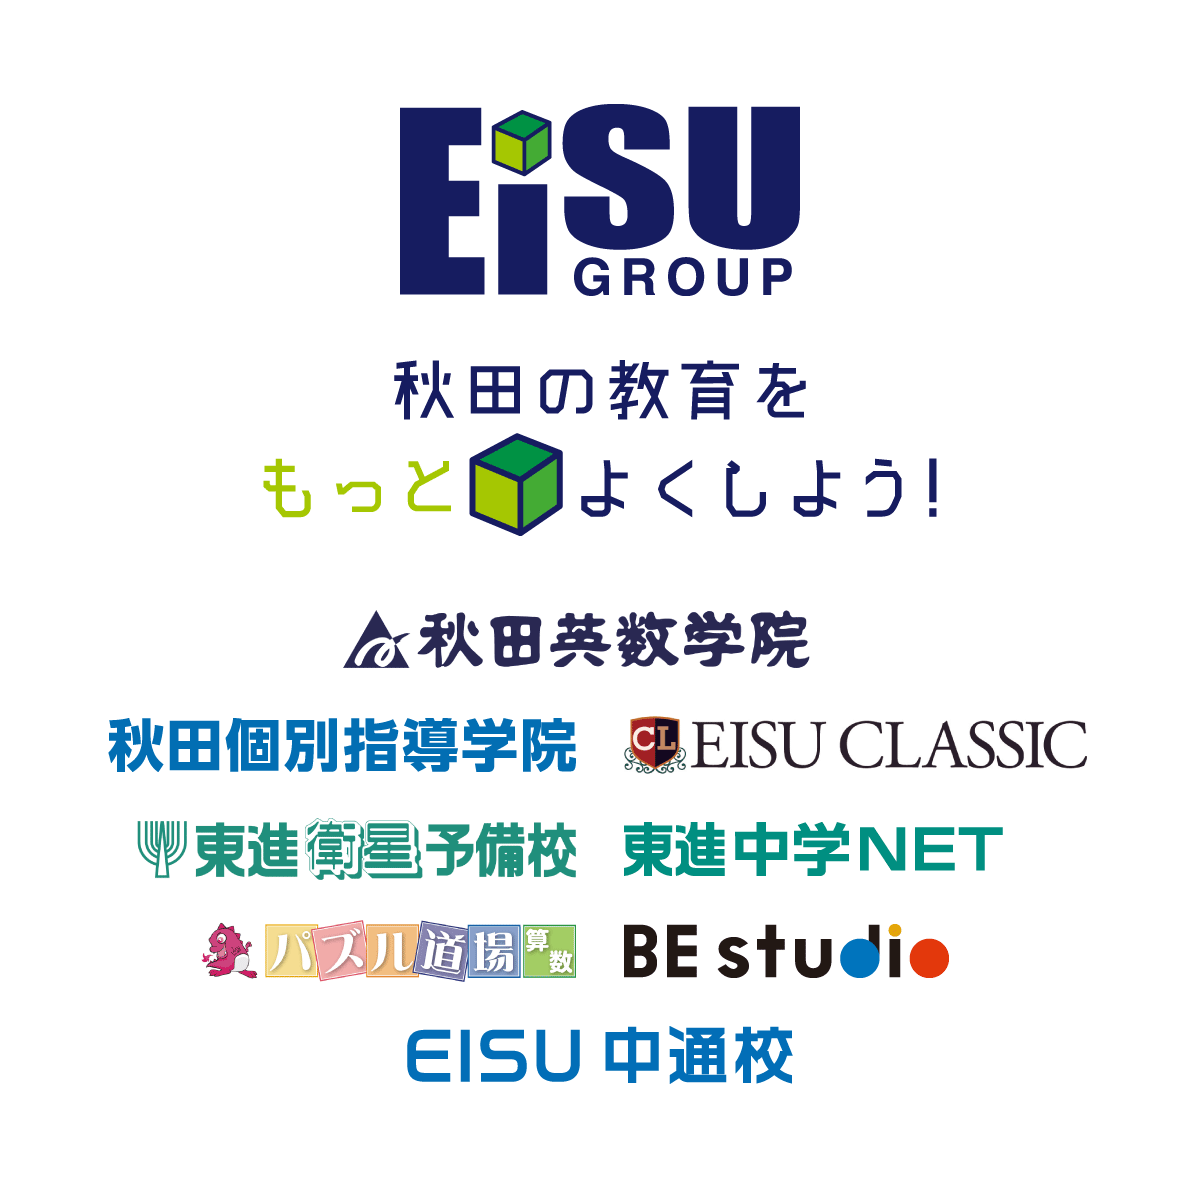 EISU GROUP（秋田の教育をもっとよくしよう！）：秋田英数学院、秋田個別指導学院、EISU CLASSIC、東進衛星予備校、東進中学NET、パズル道場算数、BE studio、EISU 中通校